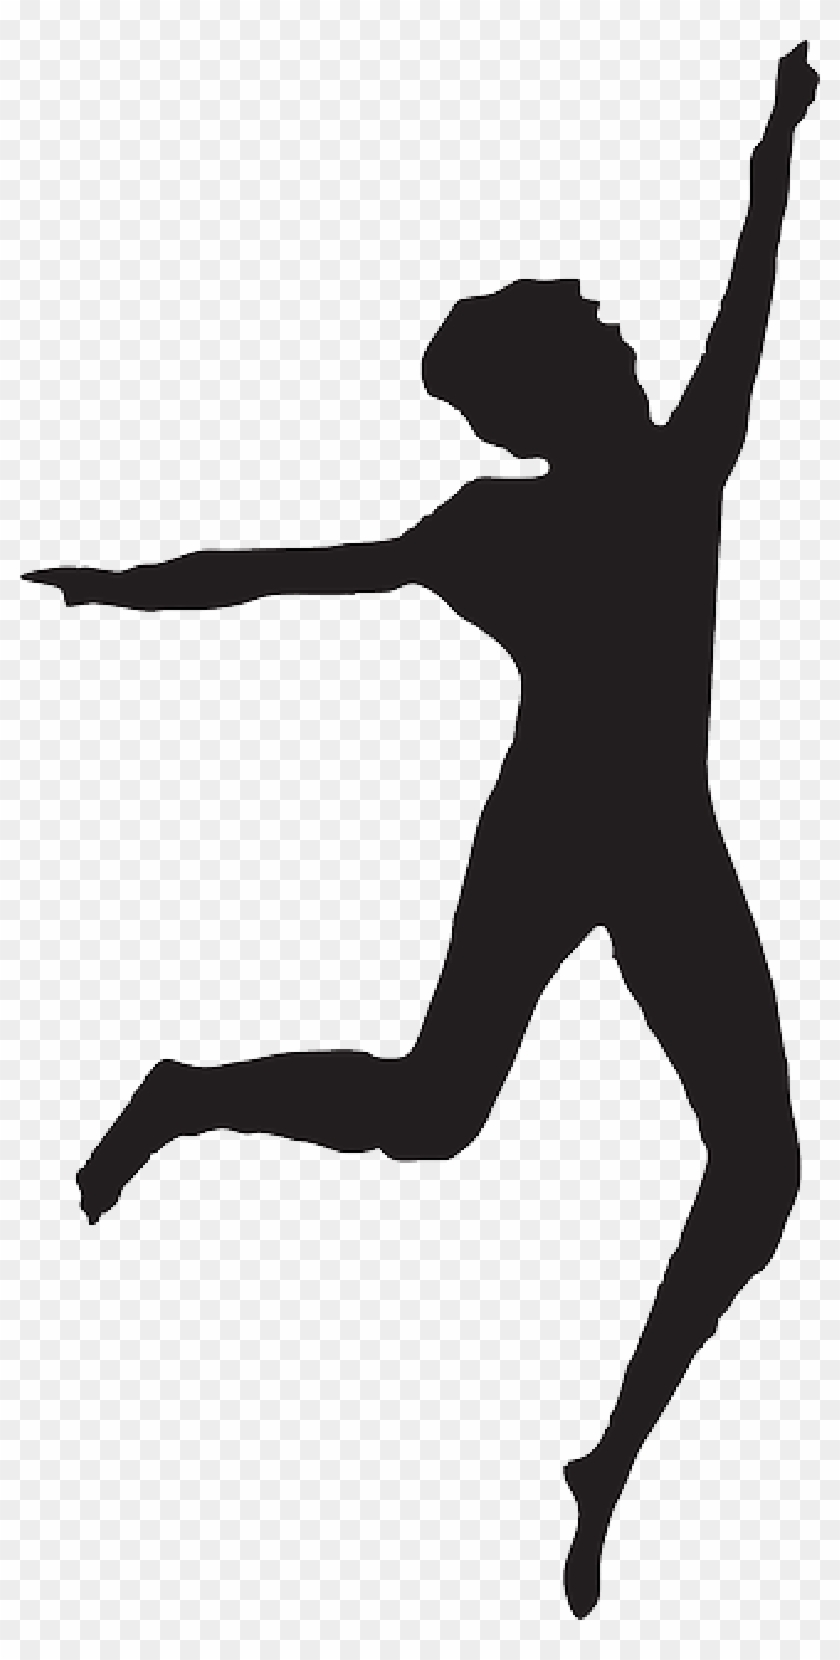 Dance silhouette stock illustration. Illustration of pose - 3392832